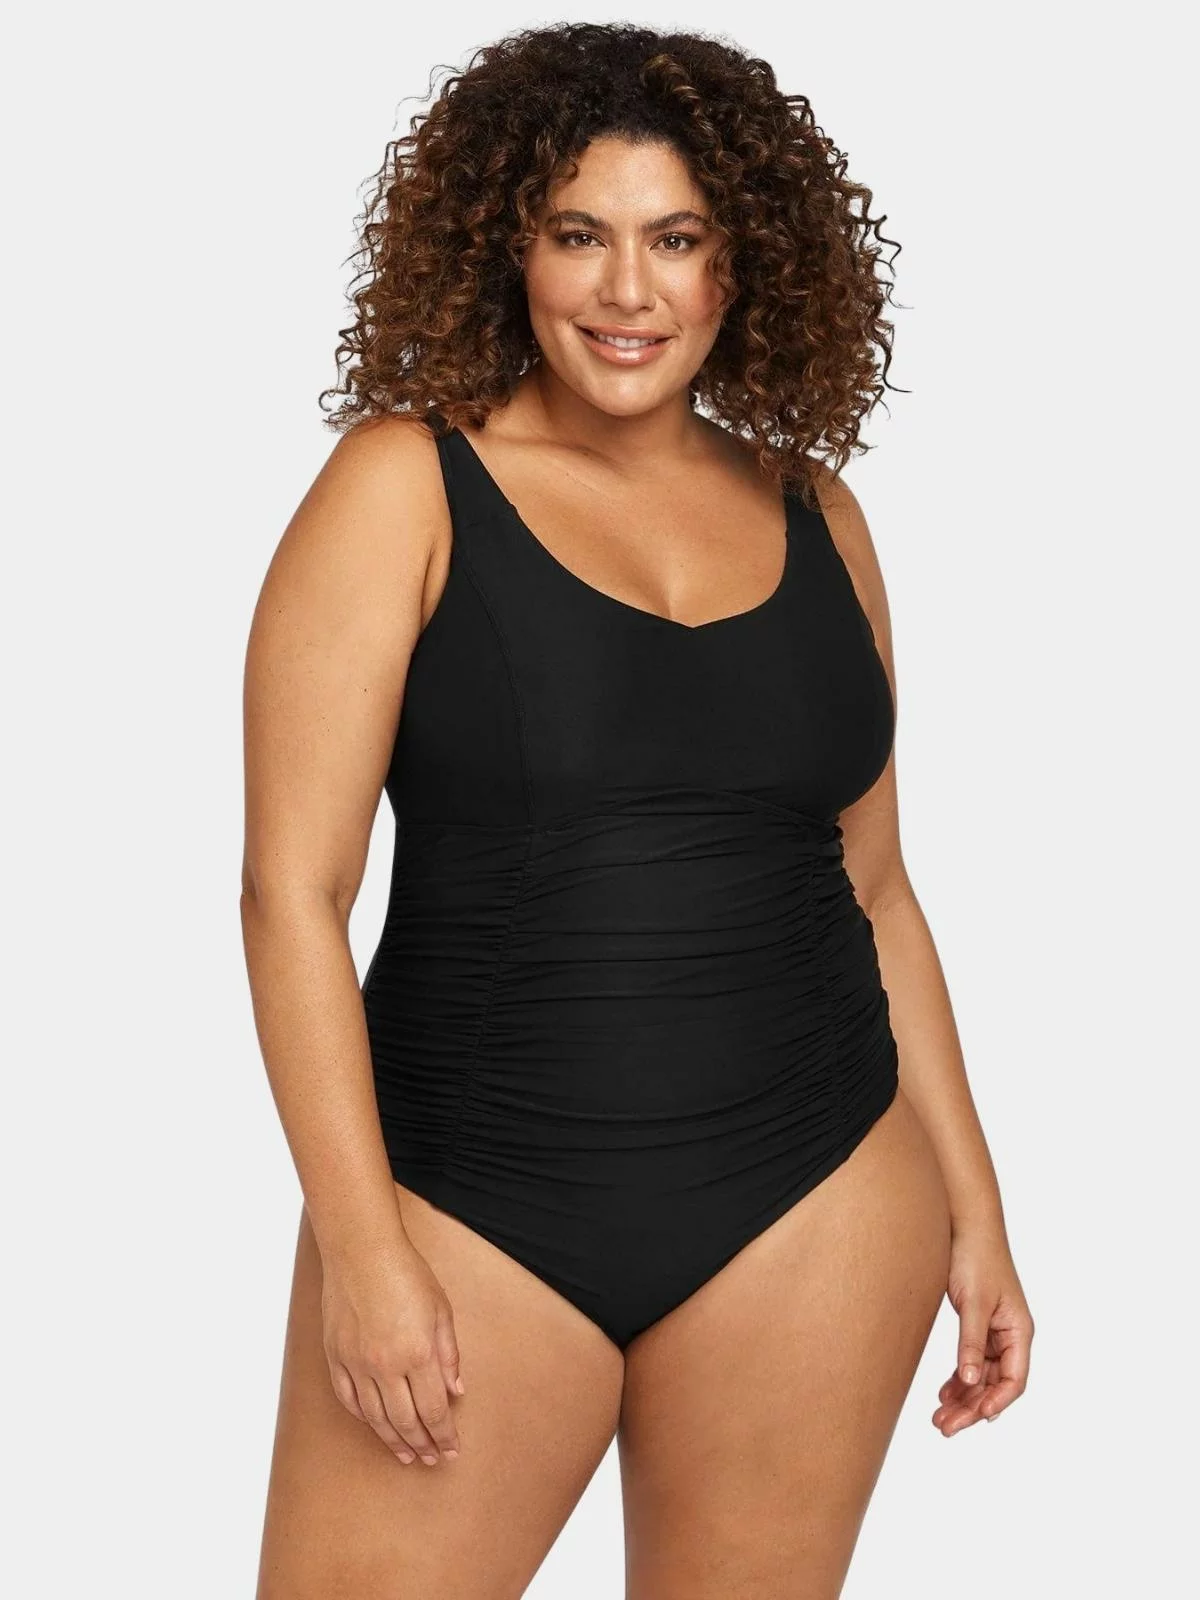 https://www.purelyswim.com/wp-content/uploads/2022/05/artesands-womens-natare-chlorine-resistant-raphael-clip-back-one-piece-swimsuit-front-1.jpg